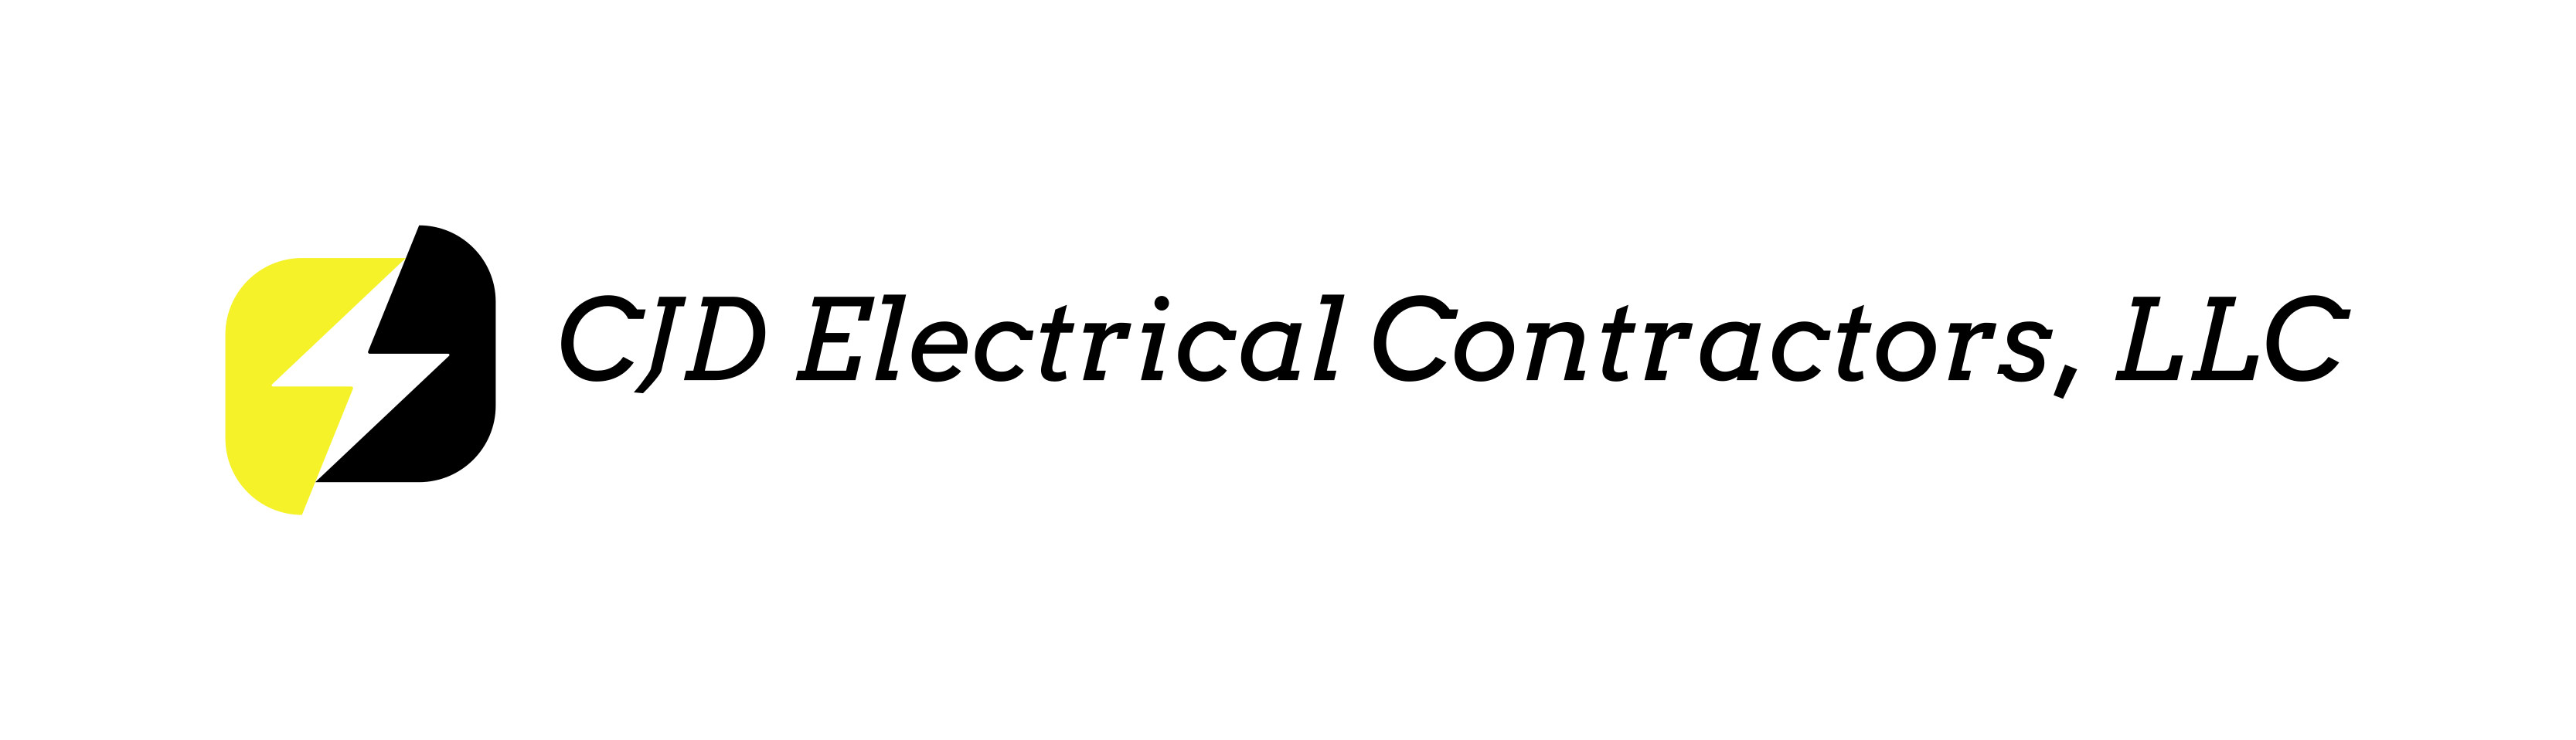 CJD Electrical Contractors, LLC Logo